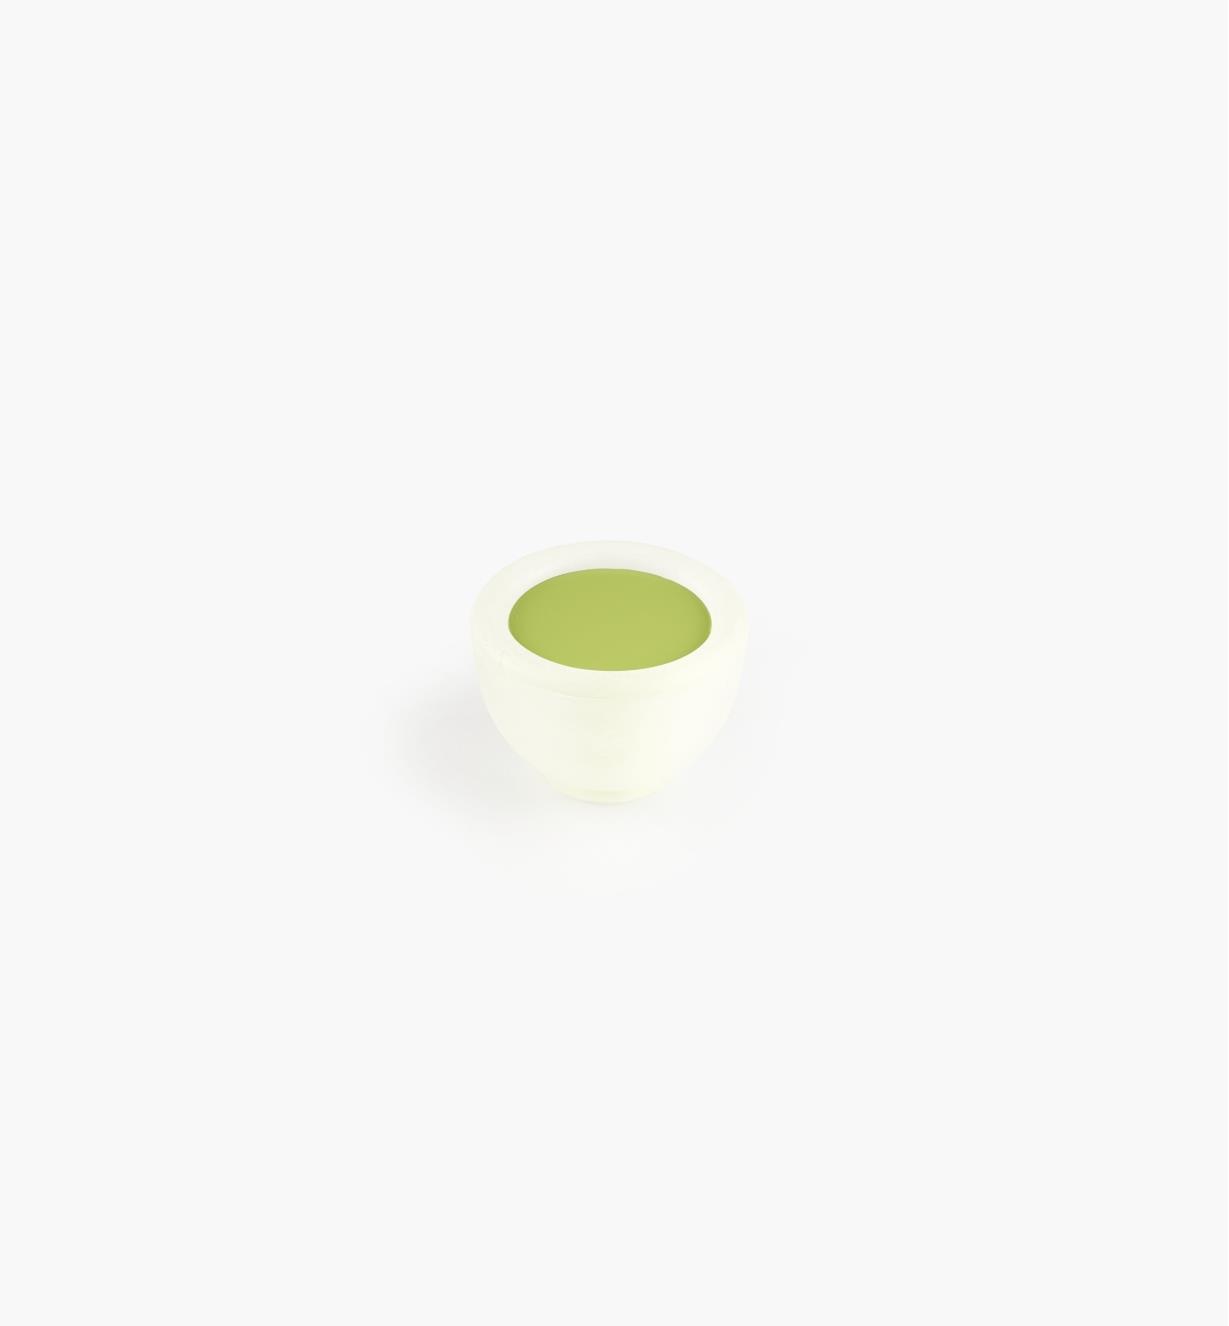 00W5420 - Bouton rond, 35 mm, série Bungee, vert-jaune